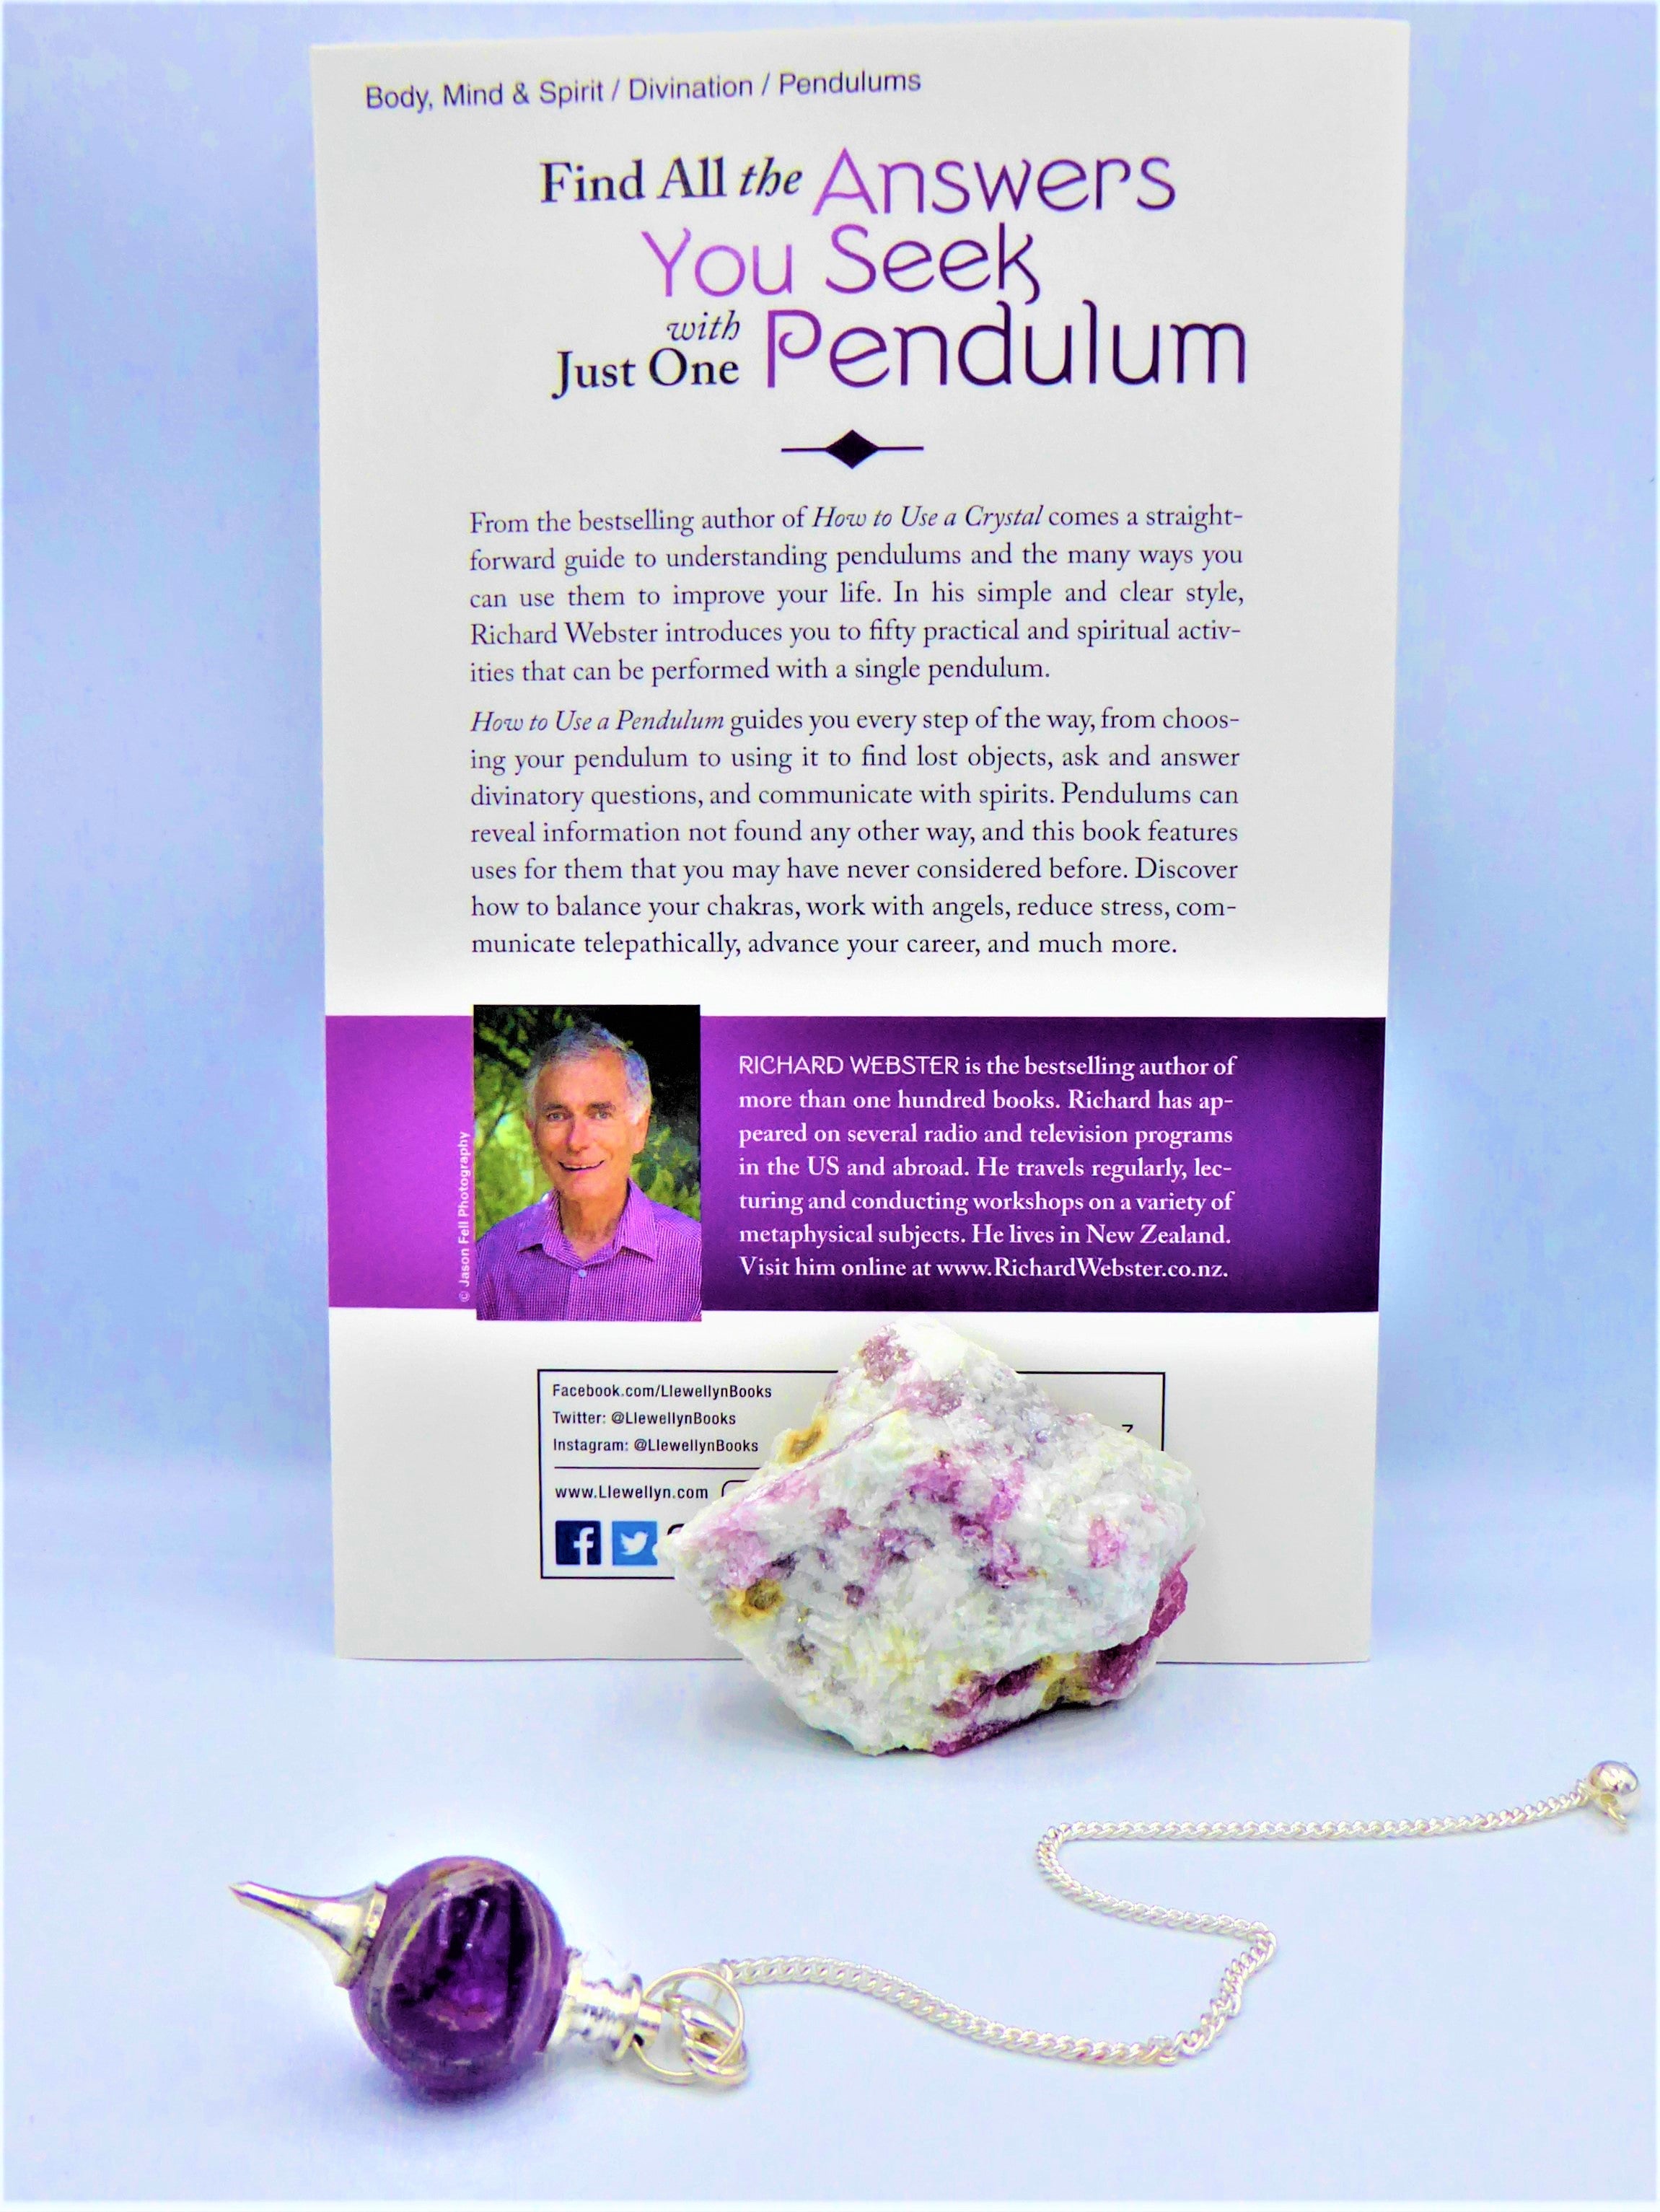 How to Use a Pendulum